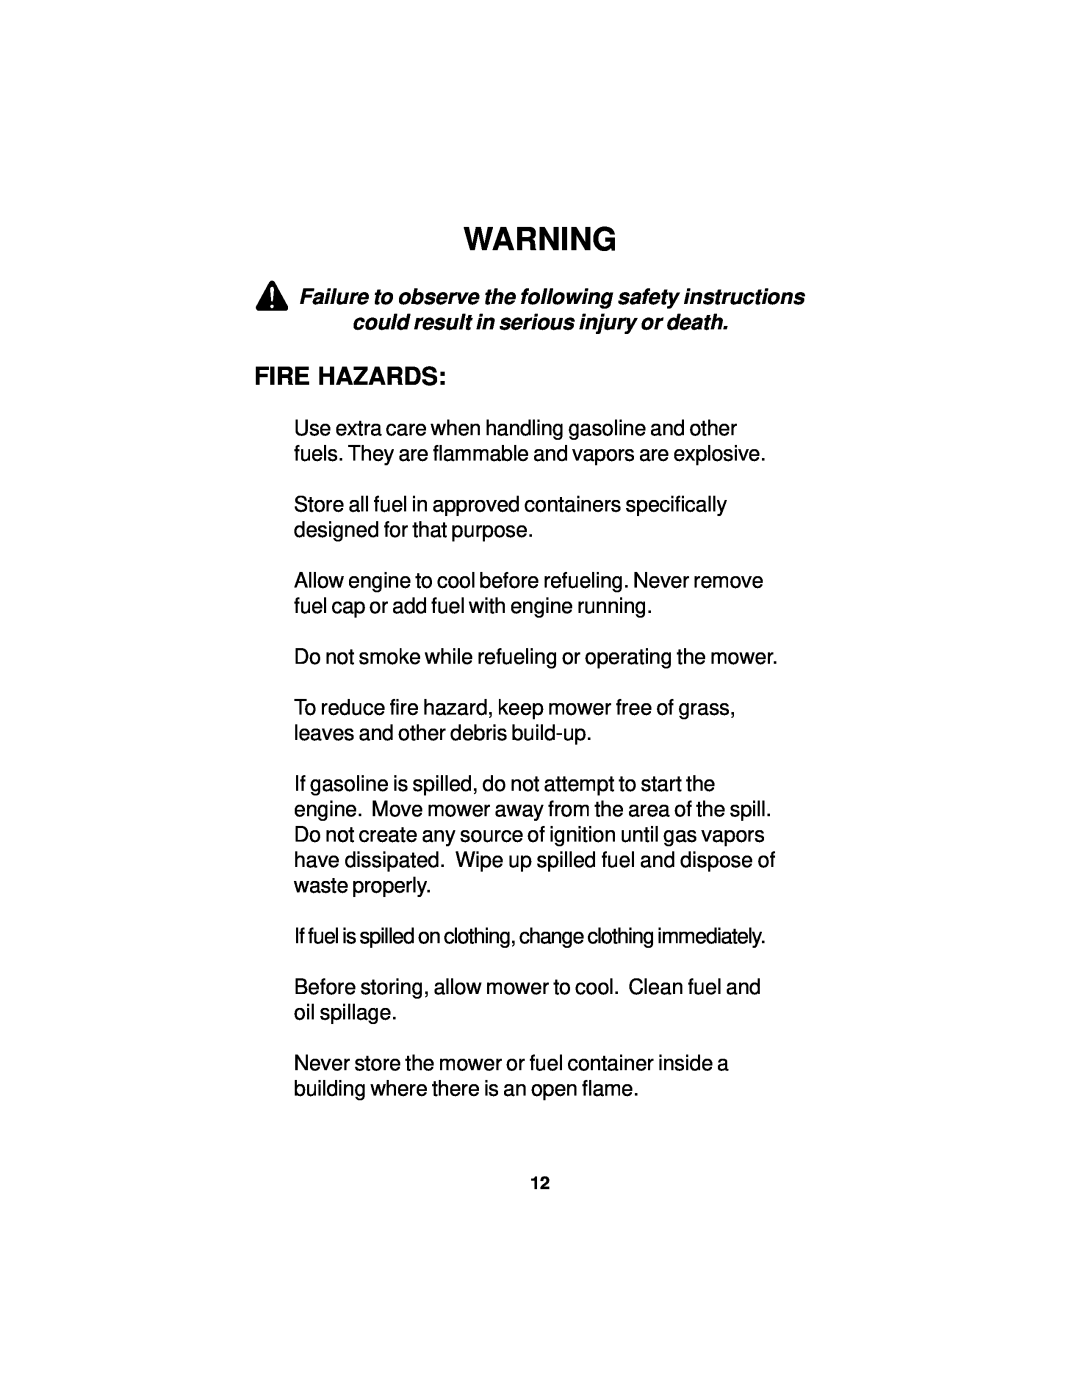 Dixon 18124-0804 manual Fire Hazards 